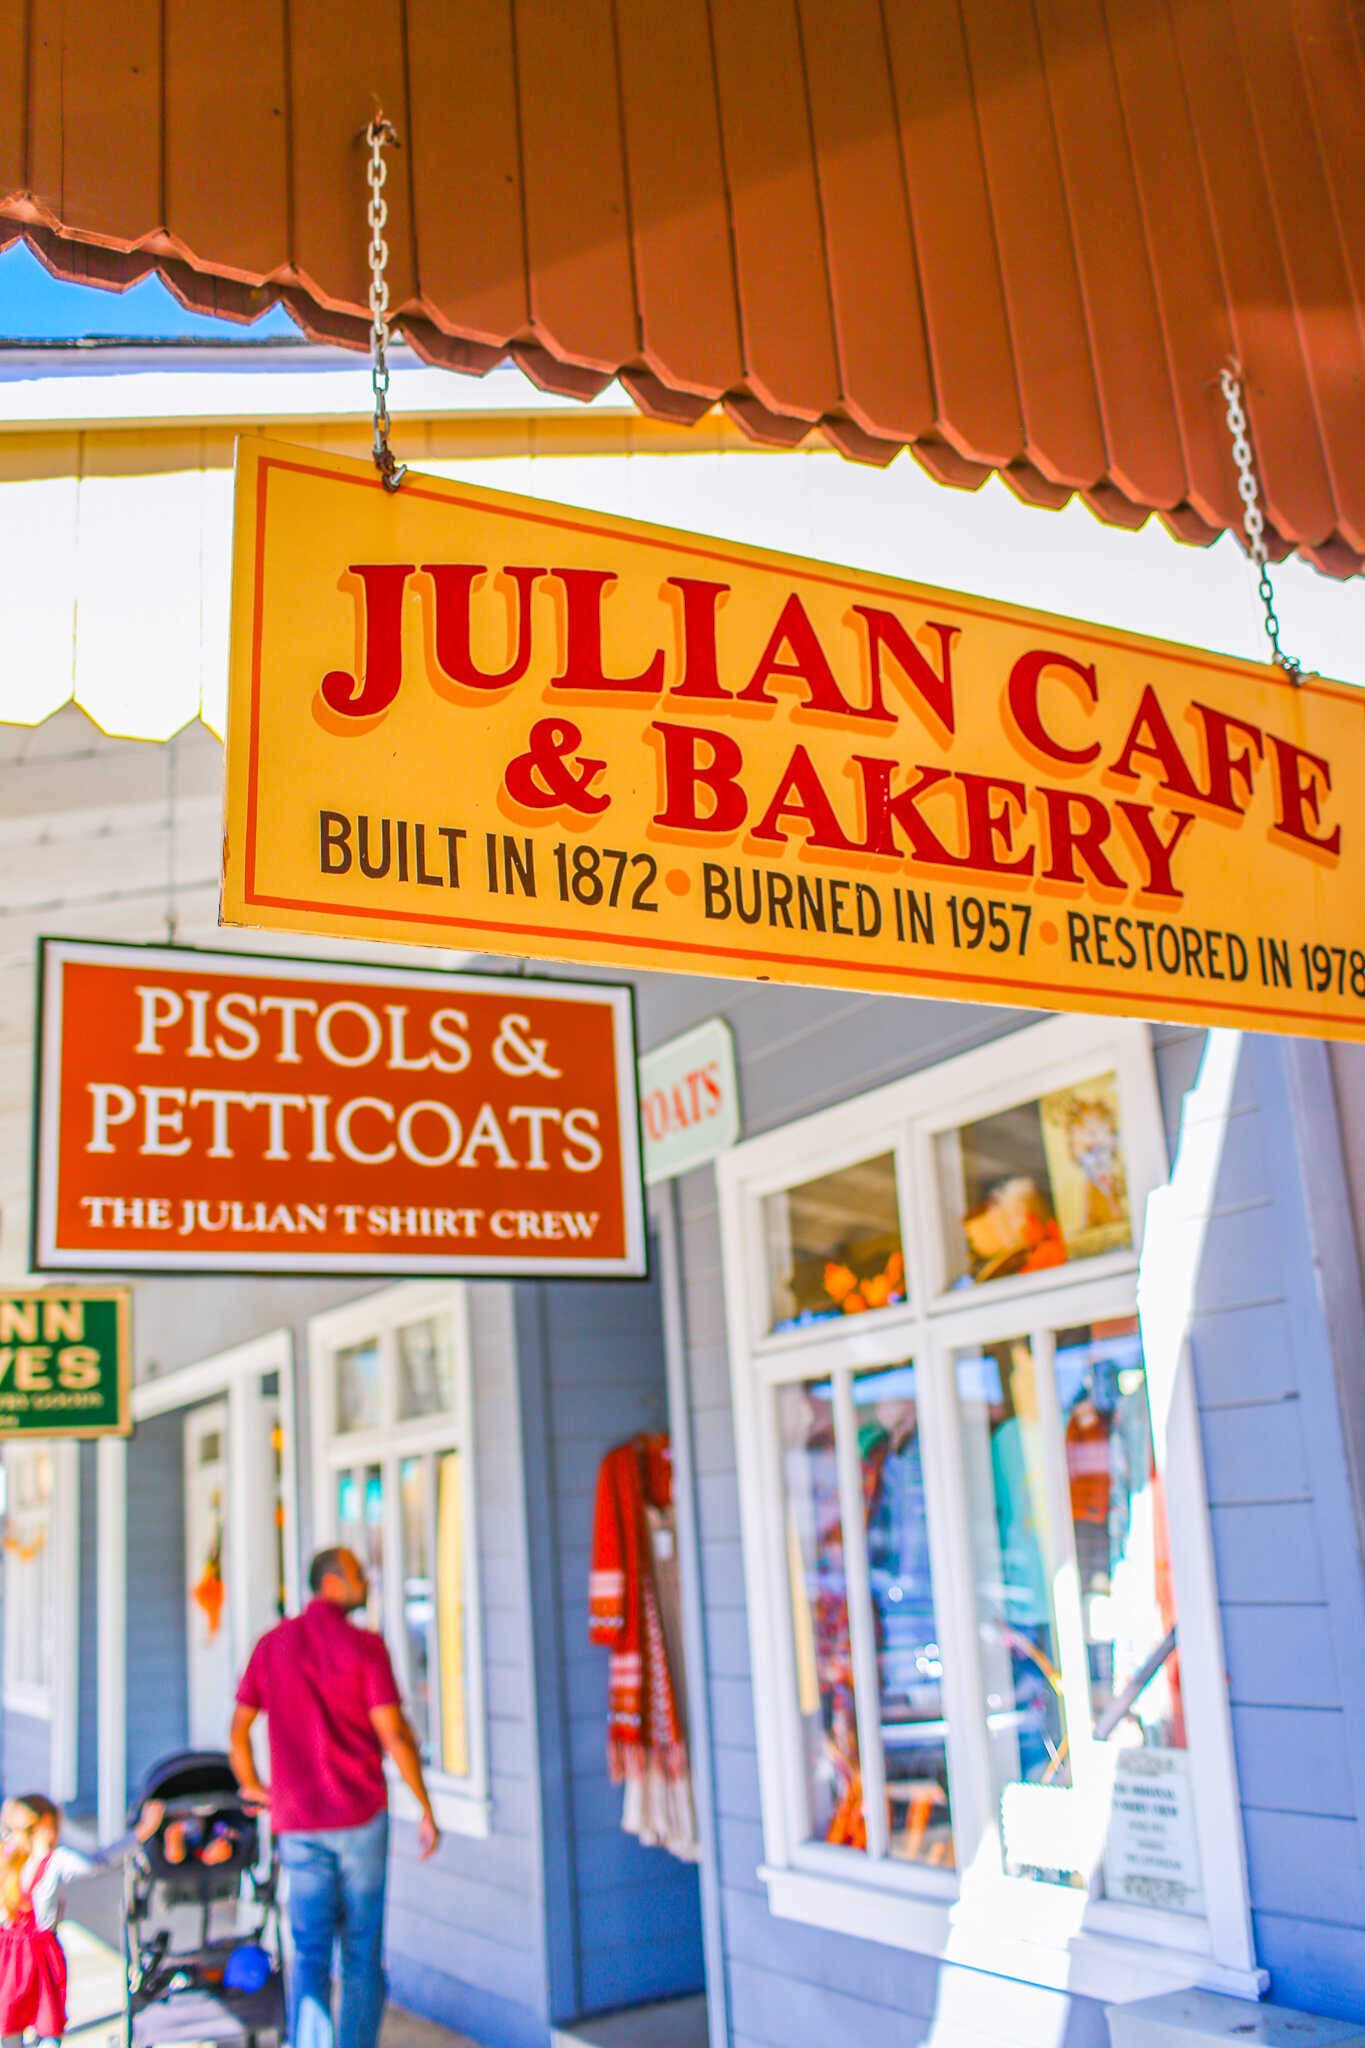 The Complete Travel Guide to Julian, California - The Julian Cafe & Bakery in downtown Julian.